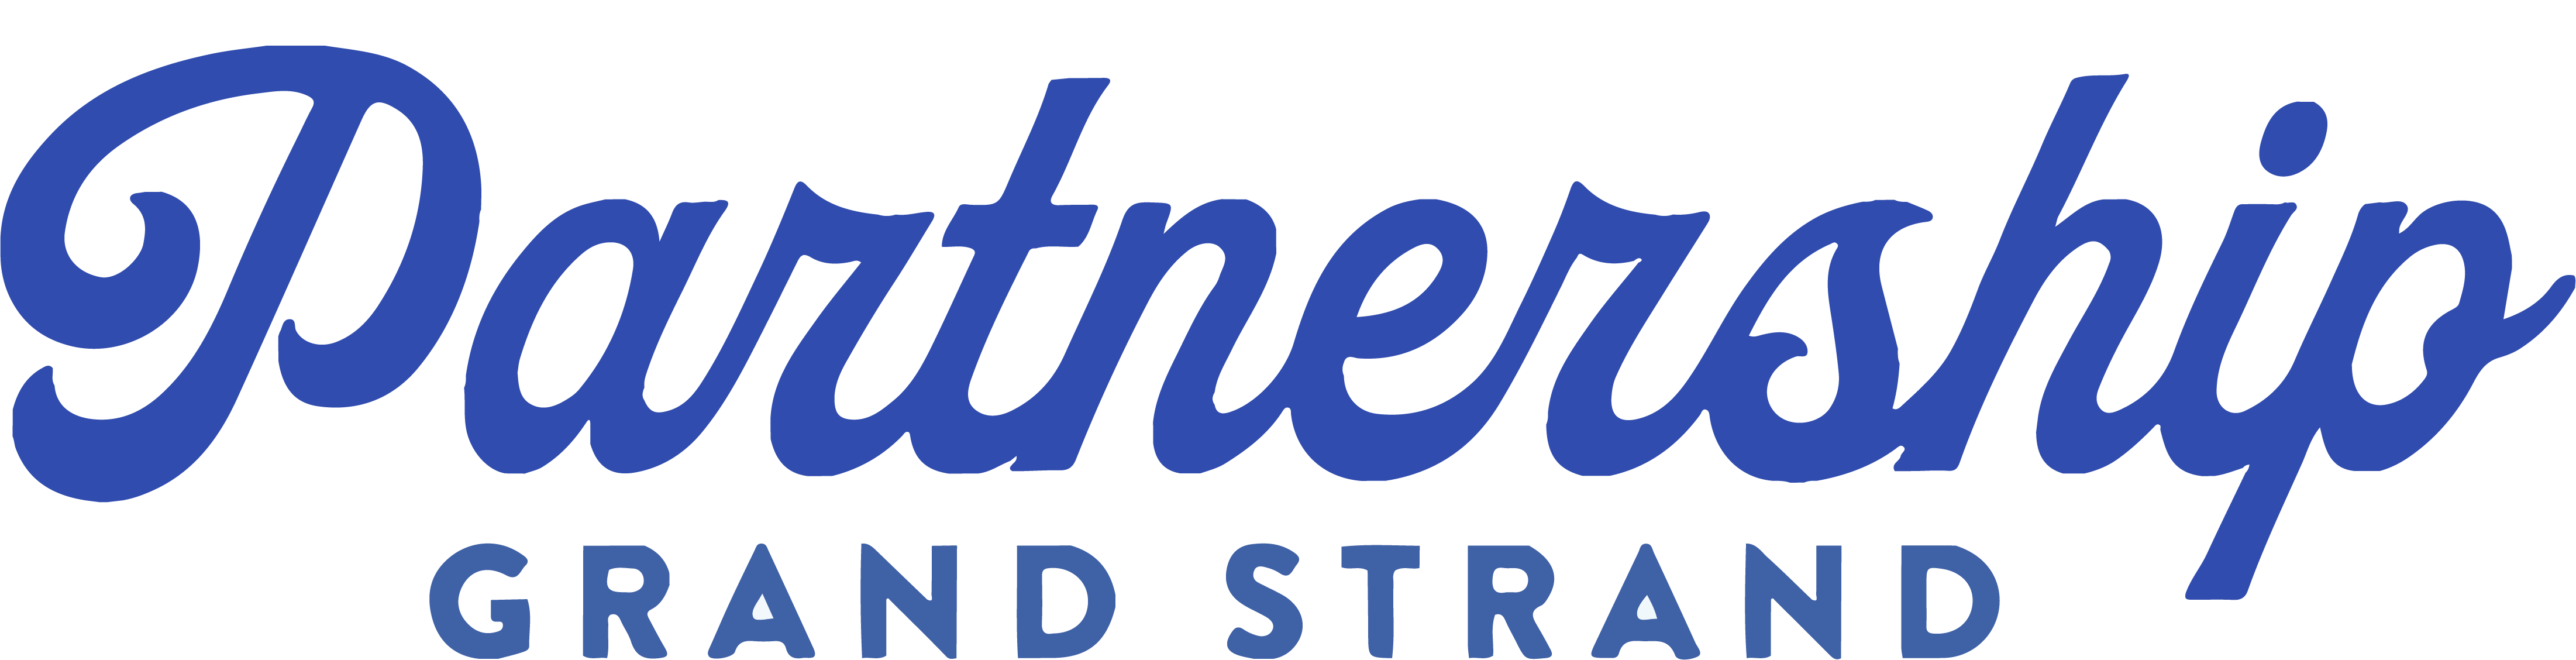 Partnership Grand Strand logo